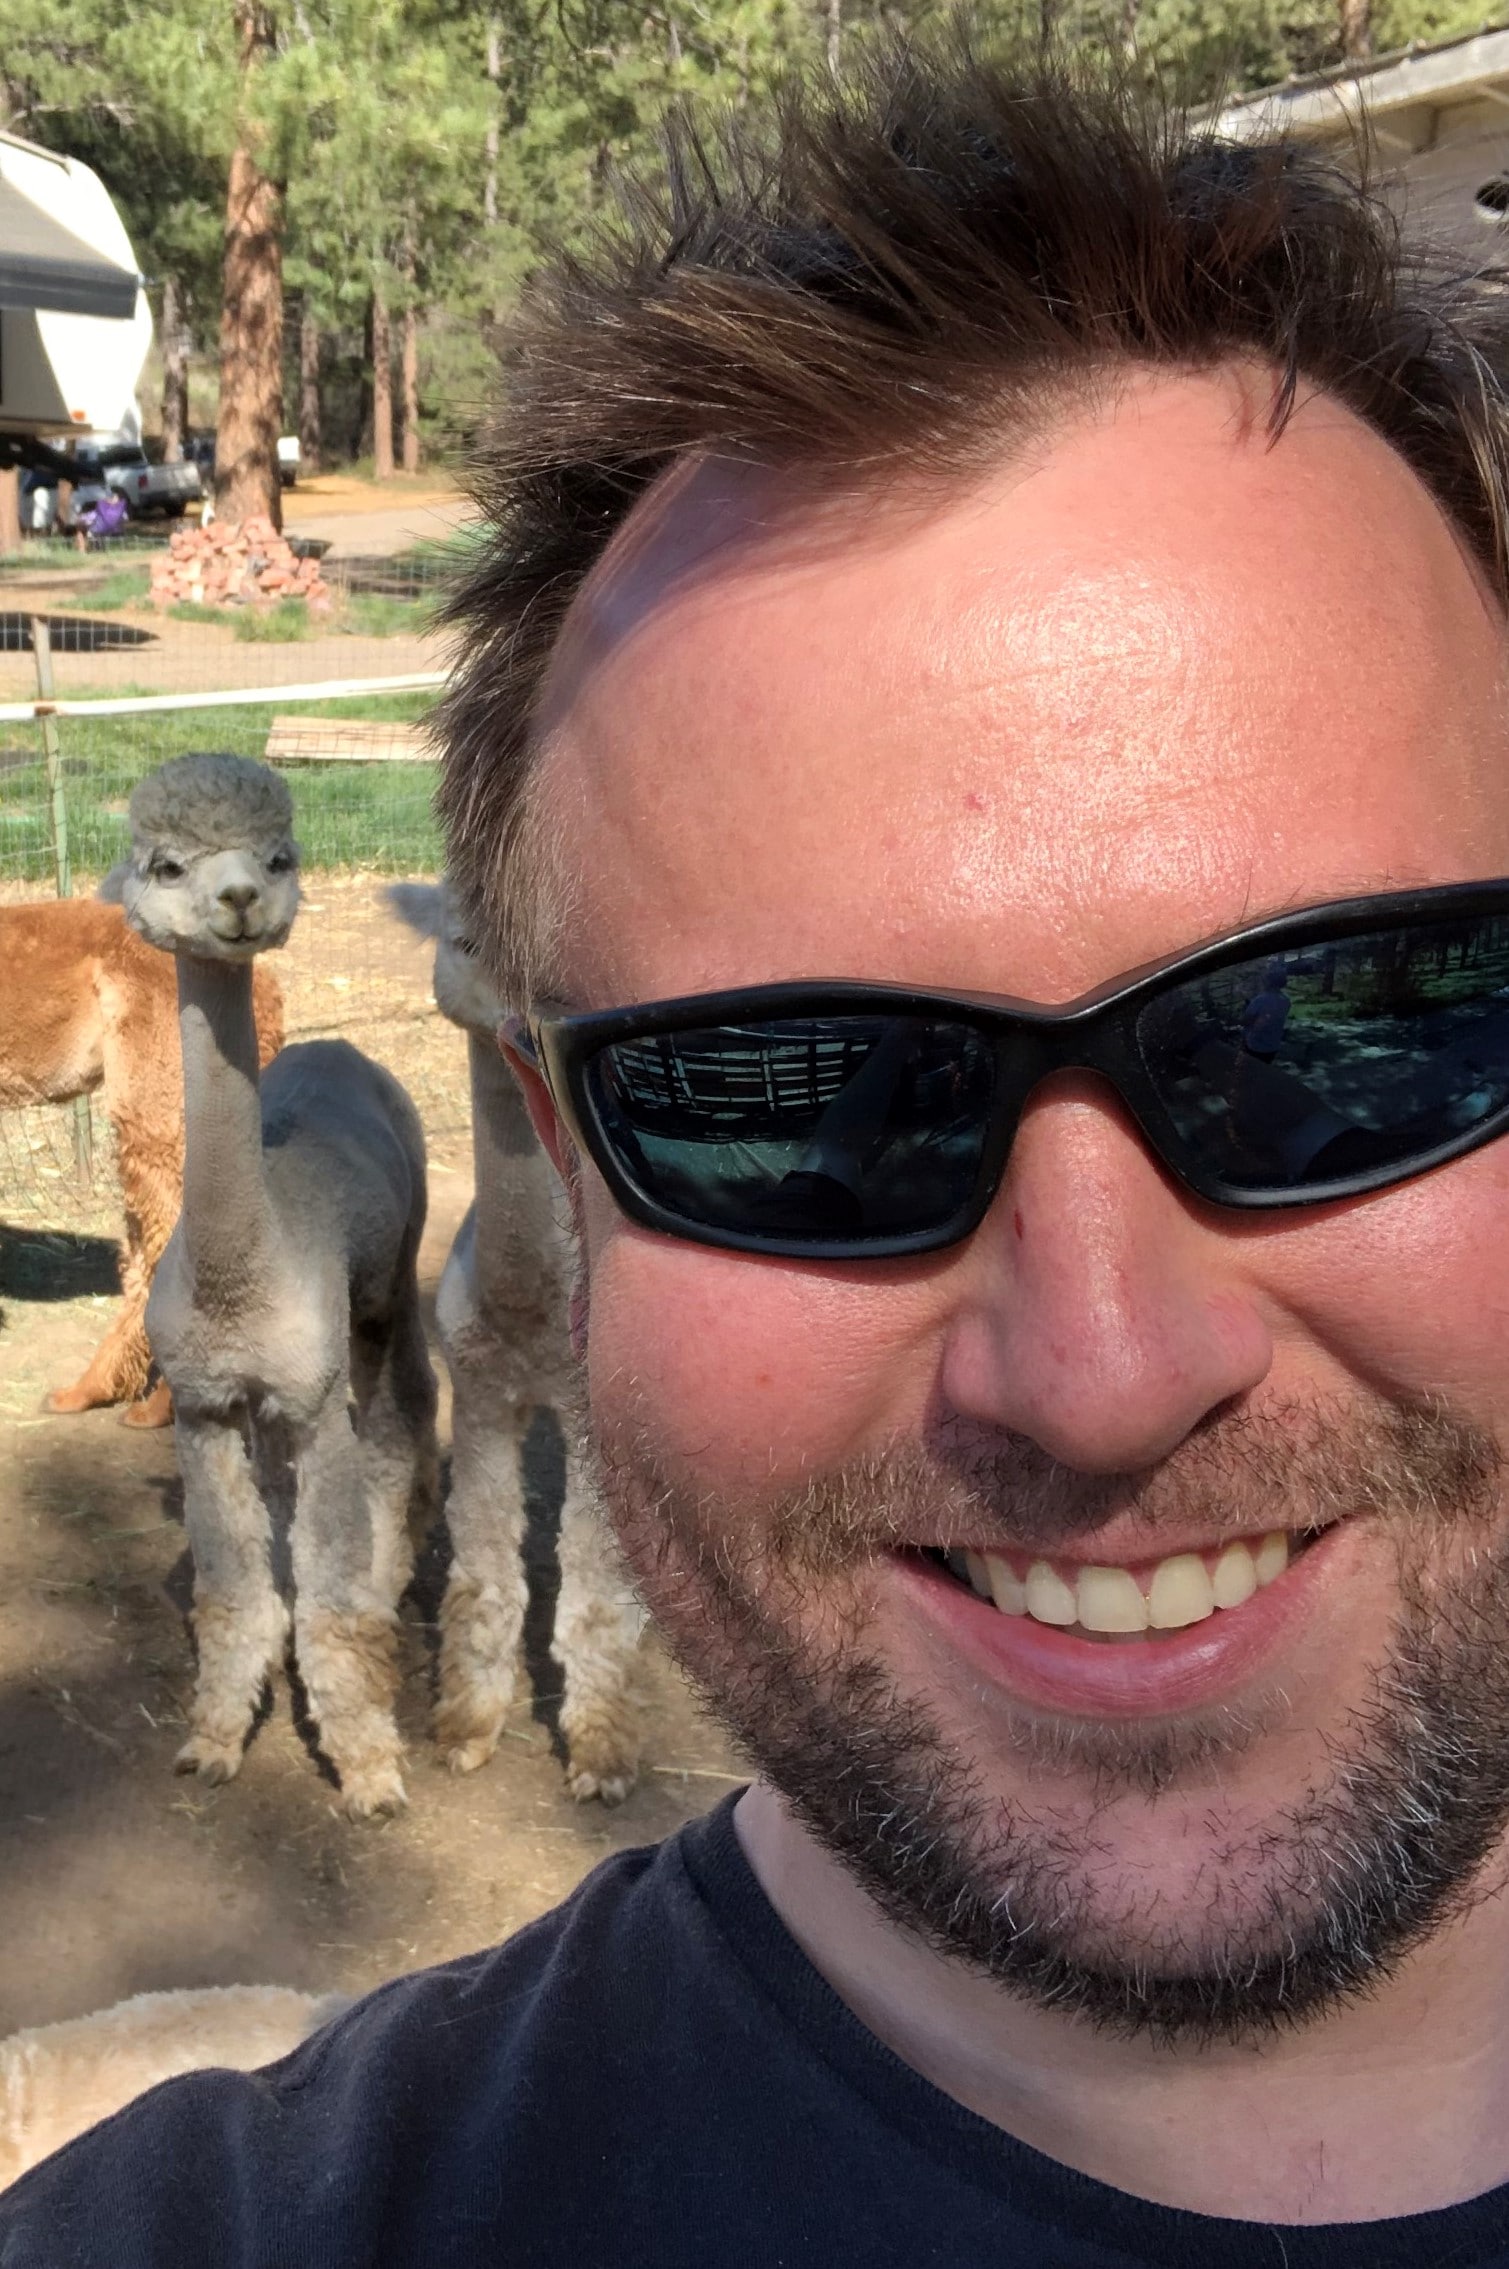 Bryan taking a selfie with alpacas